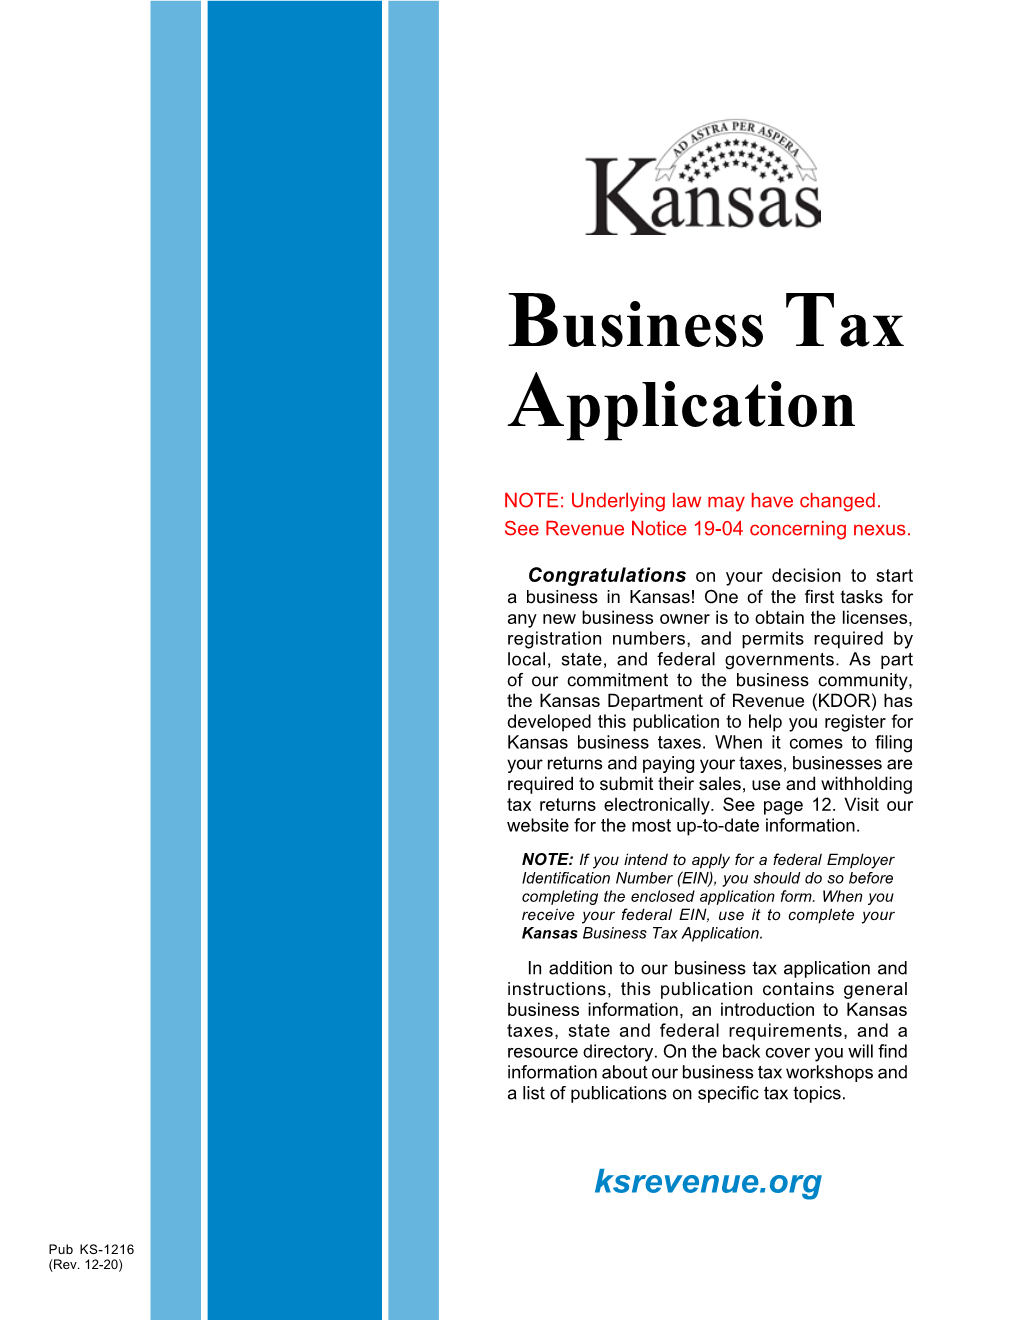 Pub. KS-1216 Business Tax Application and Instructions Rev. 12